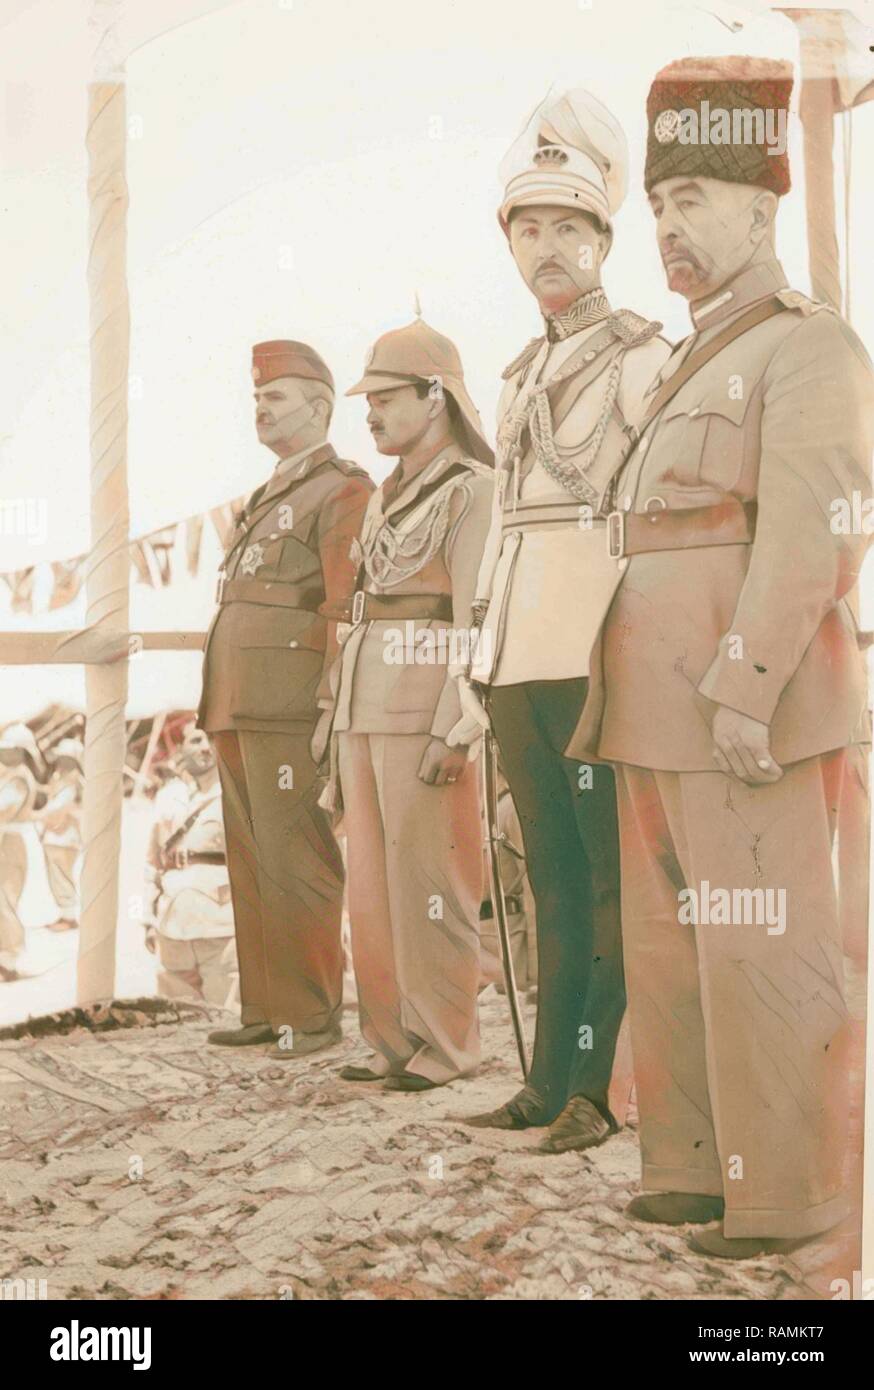 Coronation' of King Abdullah in Amman. King Abdullah, Emir Abdul Illah, (Regent of Iraq), Emir Naif, (King Abdullah's reimagined Stock Photo